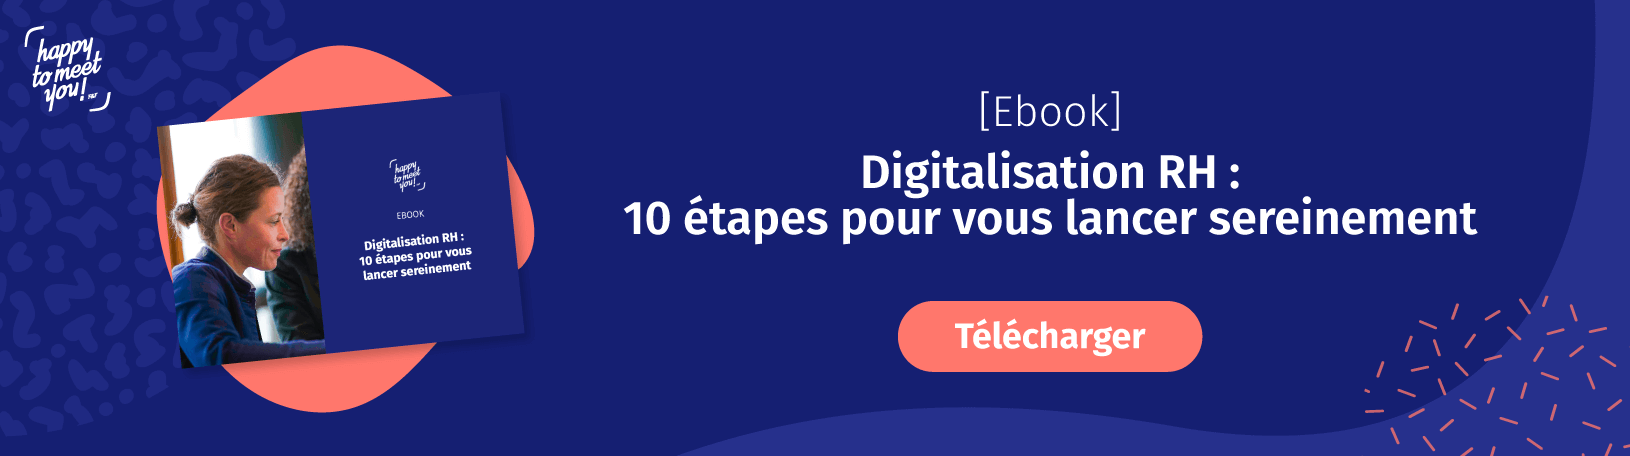 ebook-digitalisation-rh